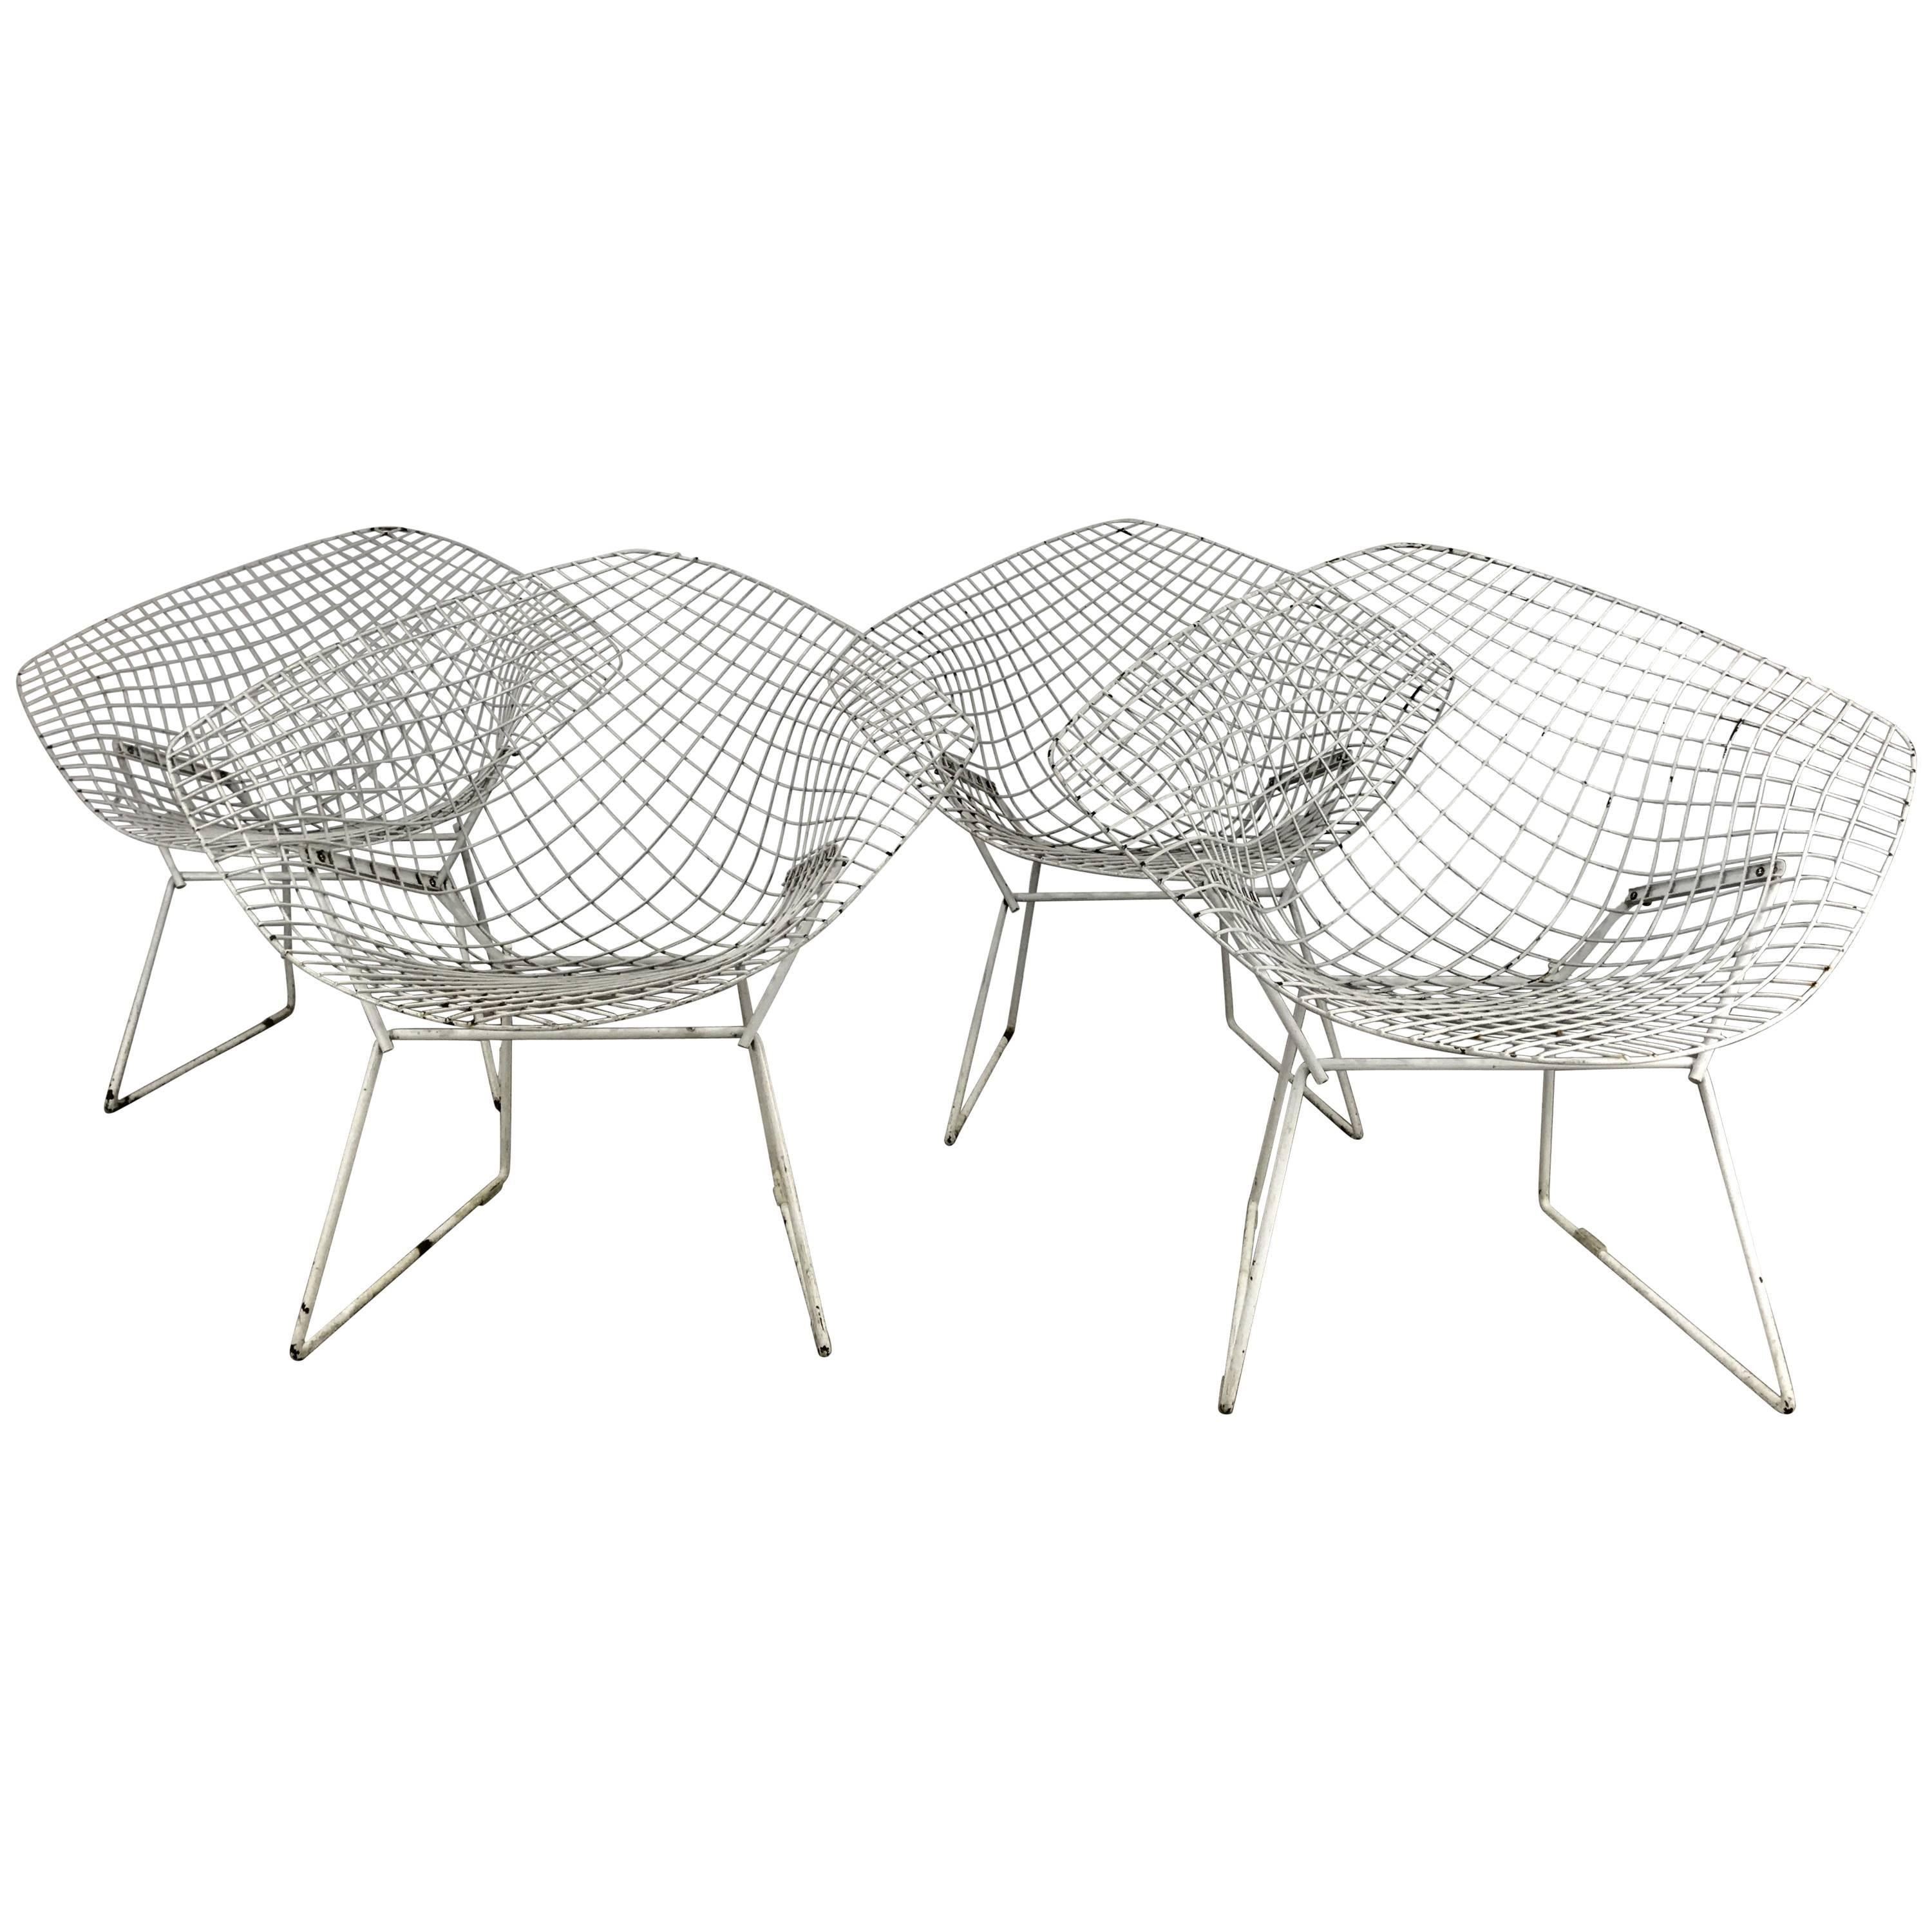 Matched pair of "Bertoia" Diamond Chairs, Classic Modern, Harry Bertoia for Knol